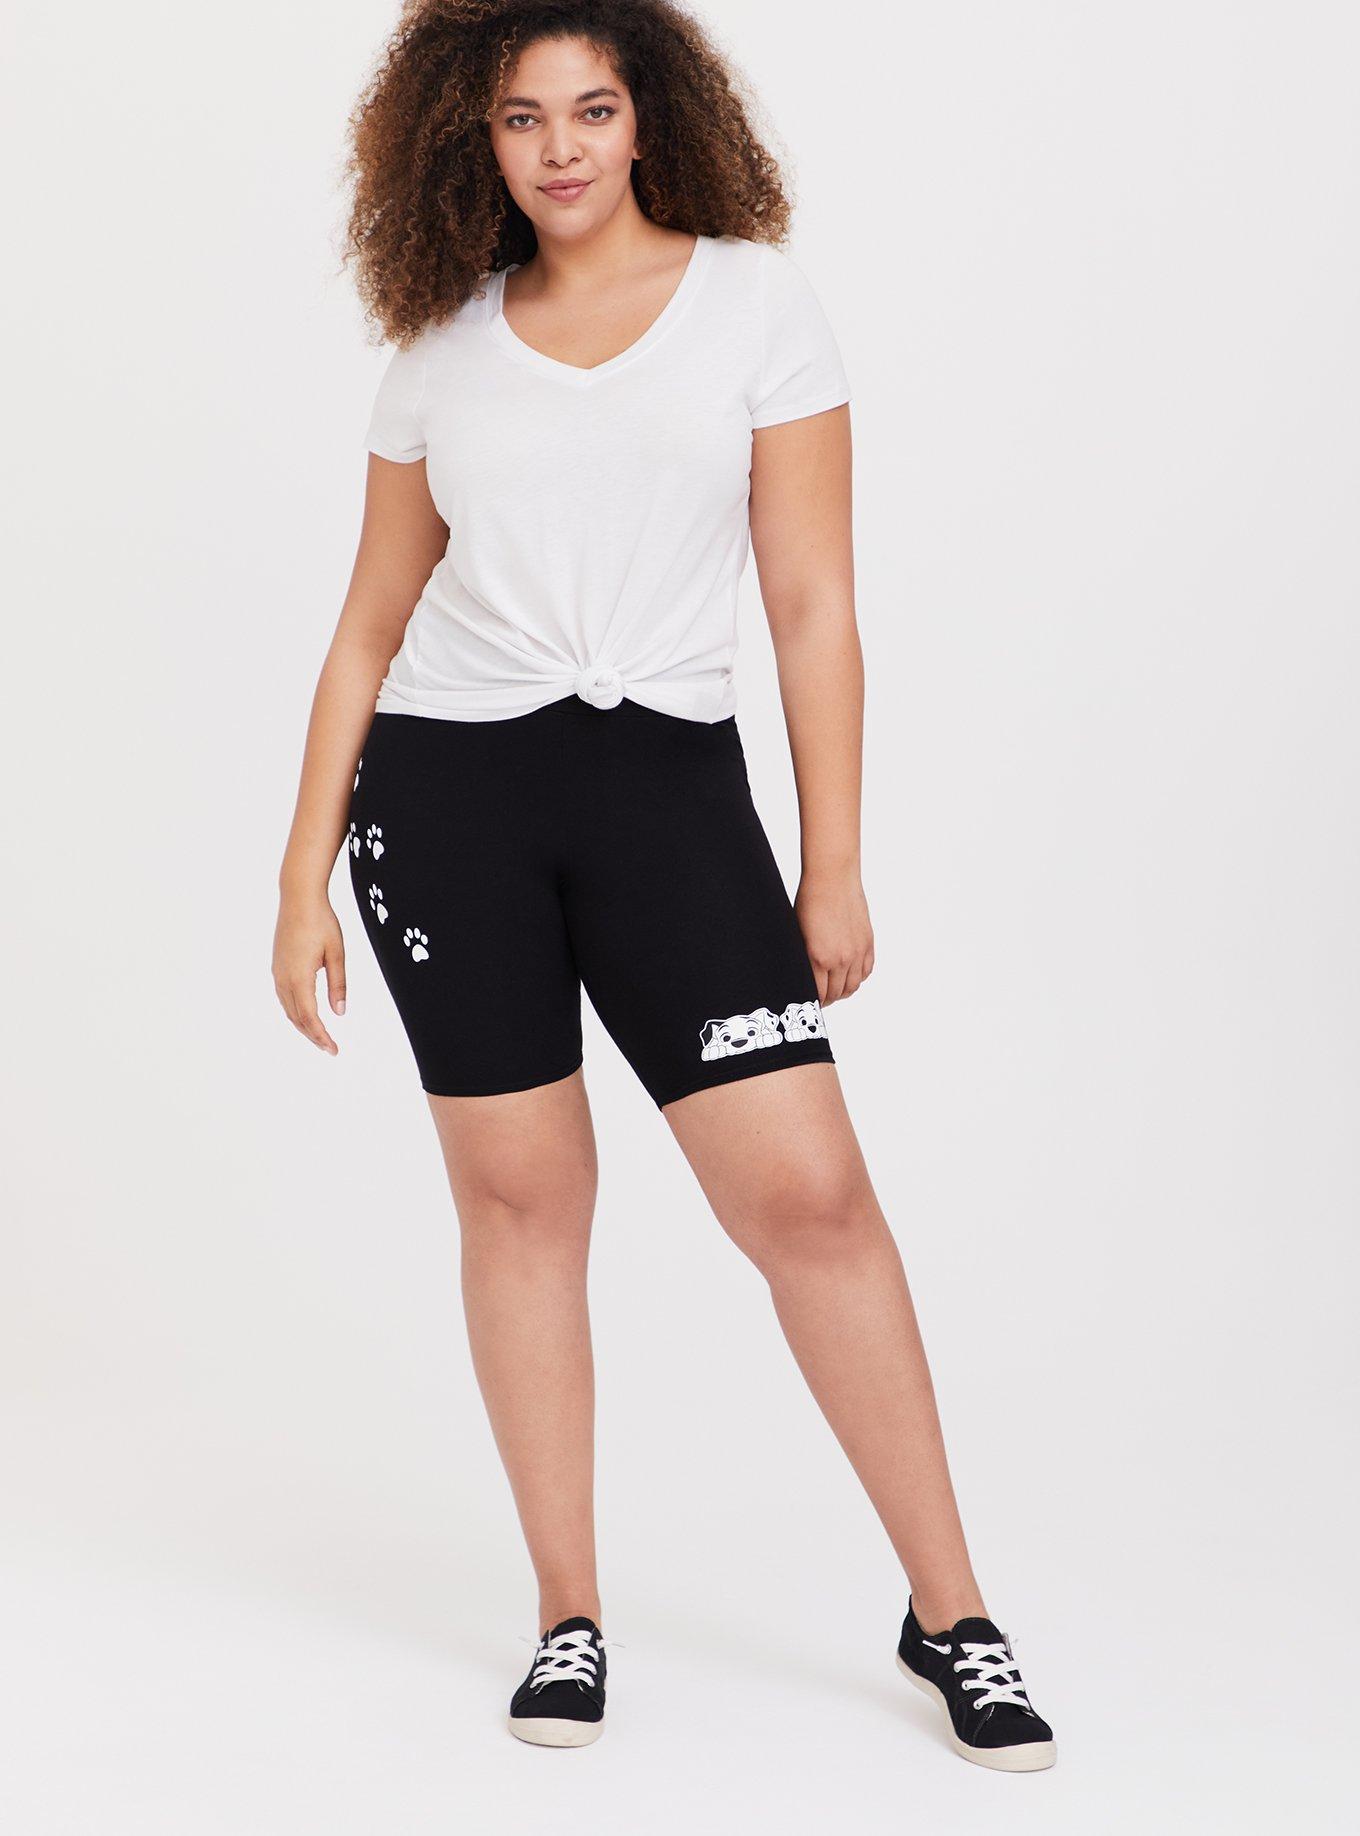 Plus Size - Disney 101 Dalmatians Black Bike Shorts - Torrid